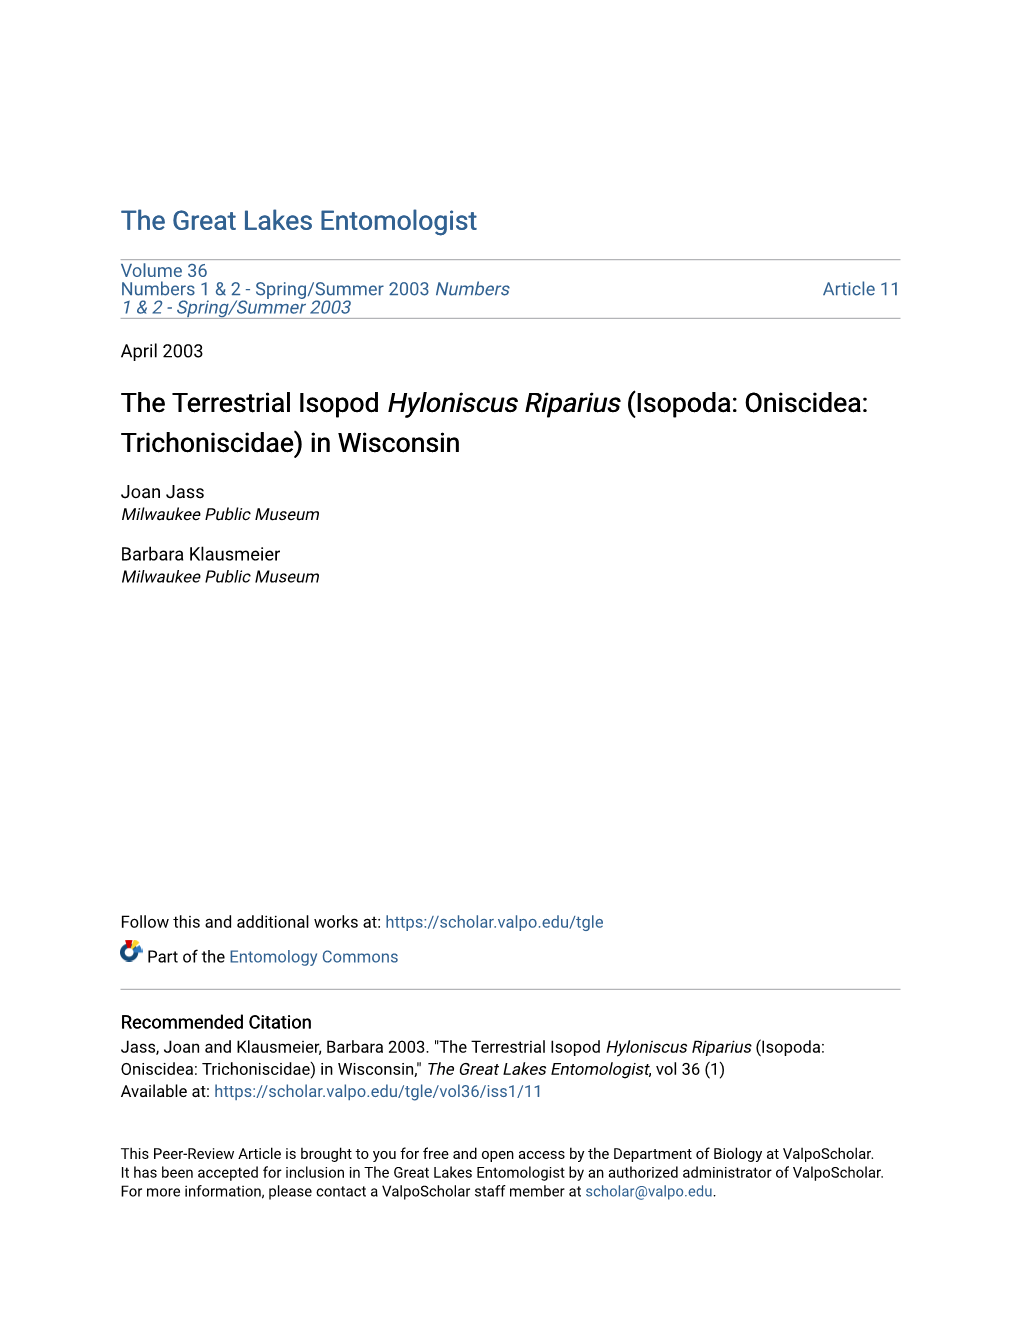 The Terrestrial Isopod Hyloniscus Riparius (Isopoda: Oniscidea: Trichoniscidae) in Wisconsin